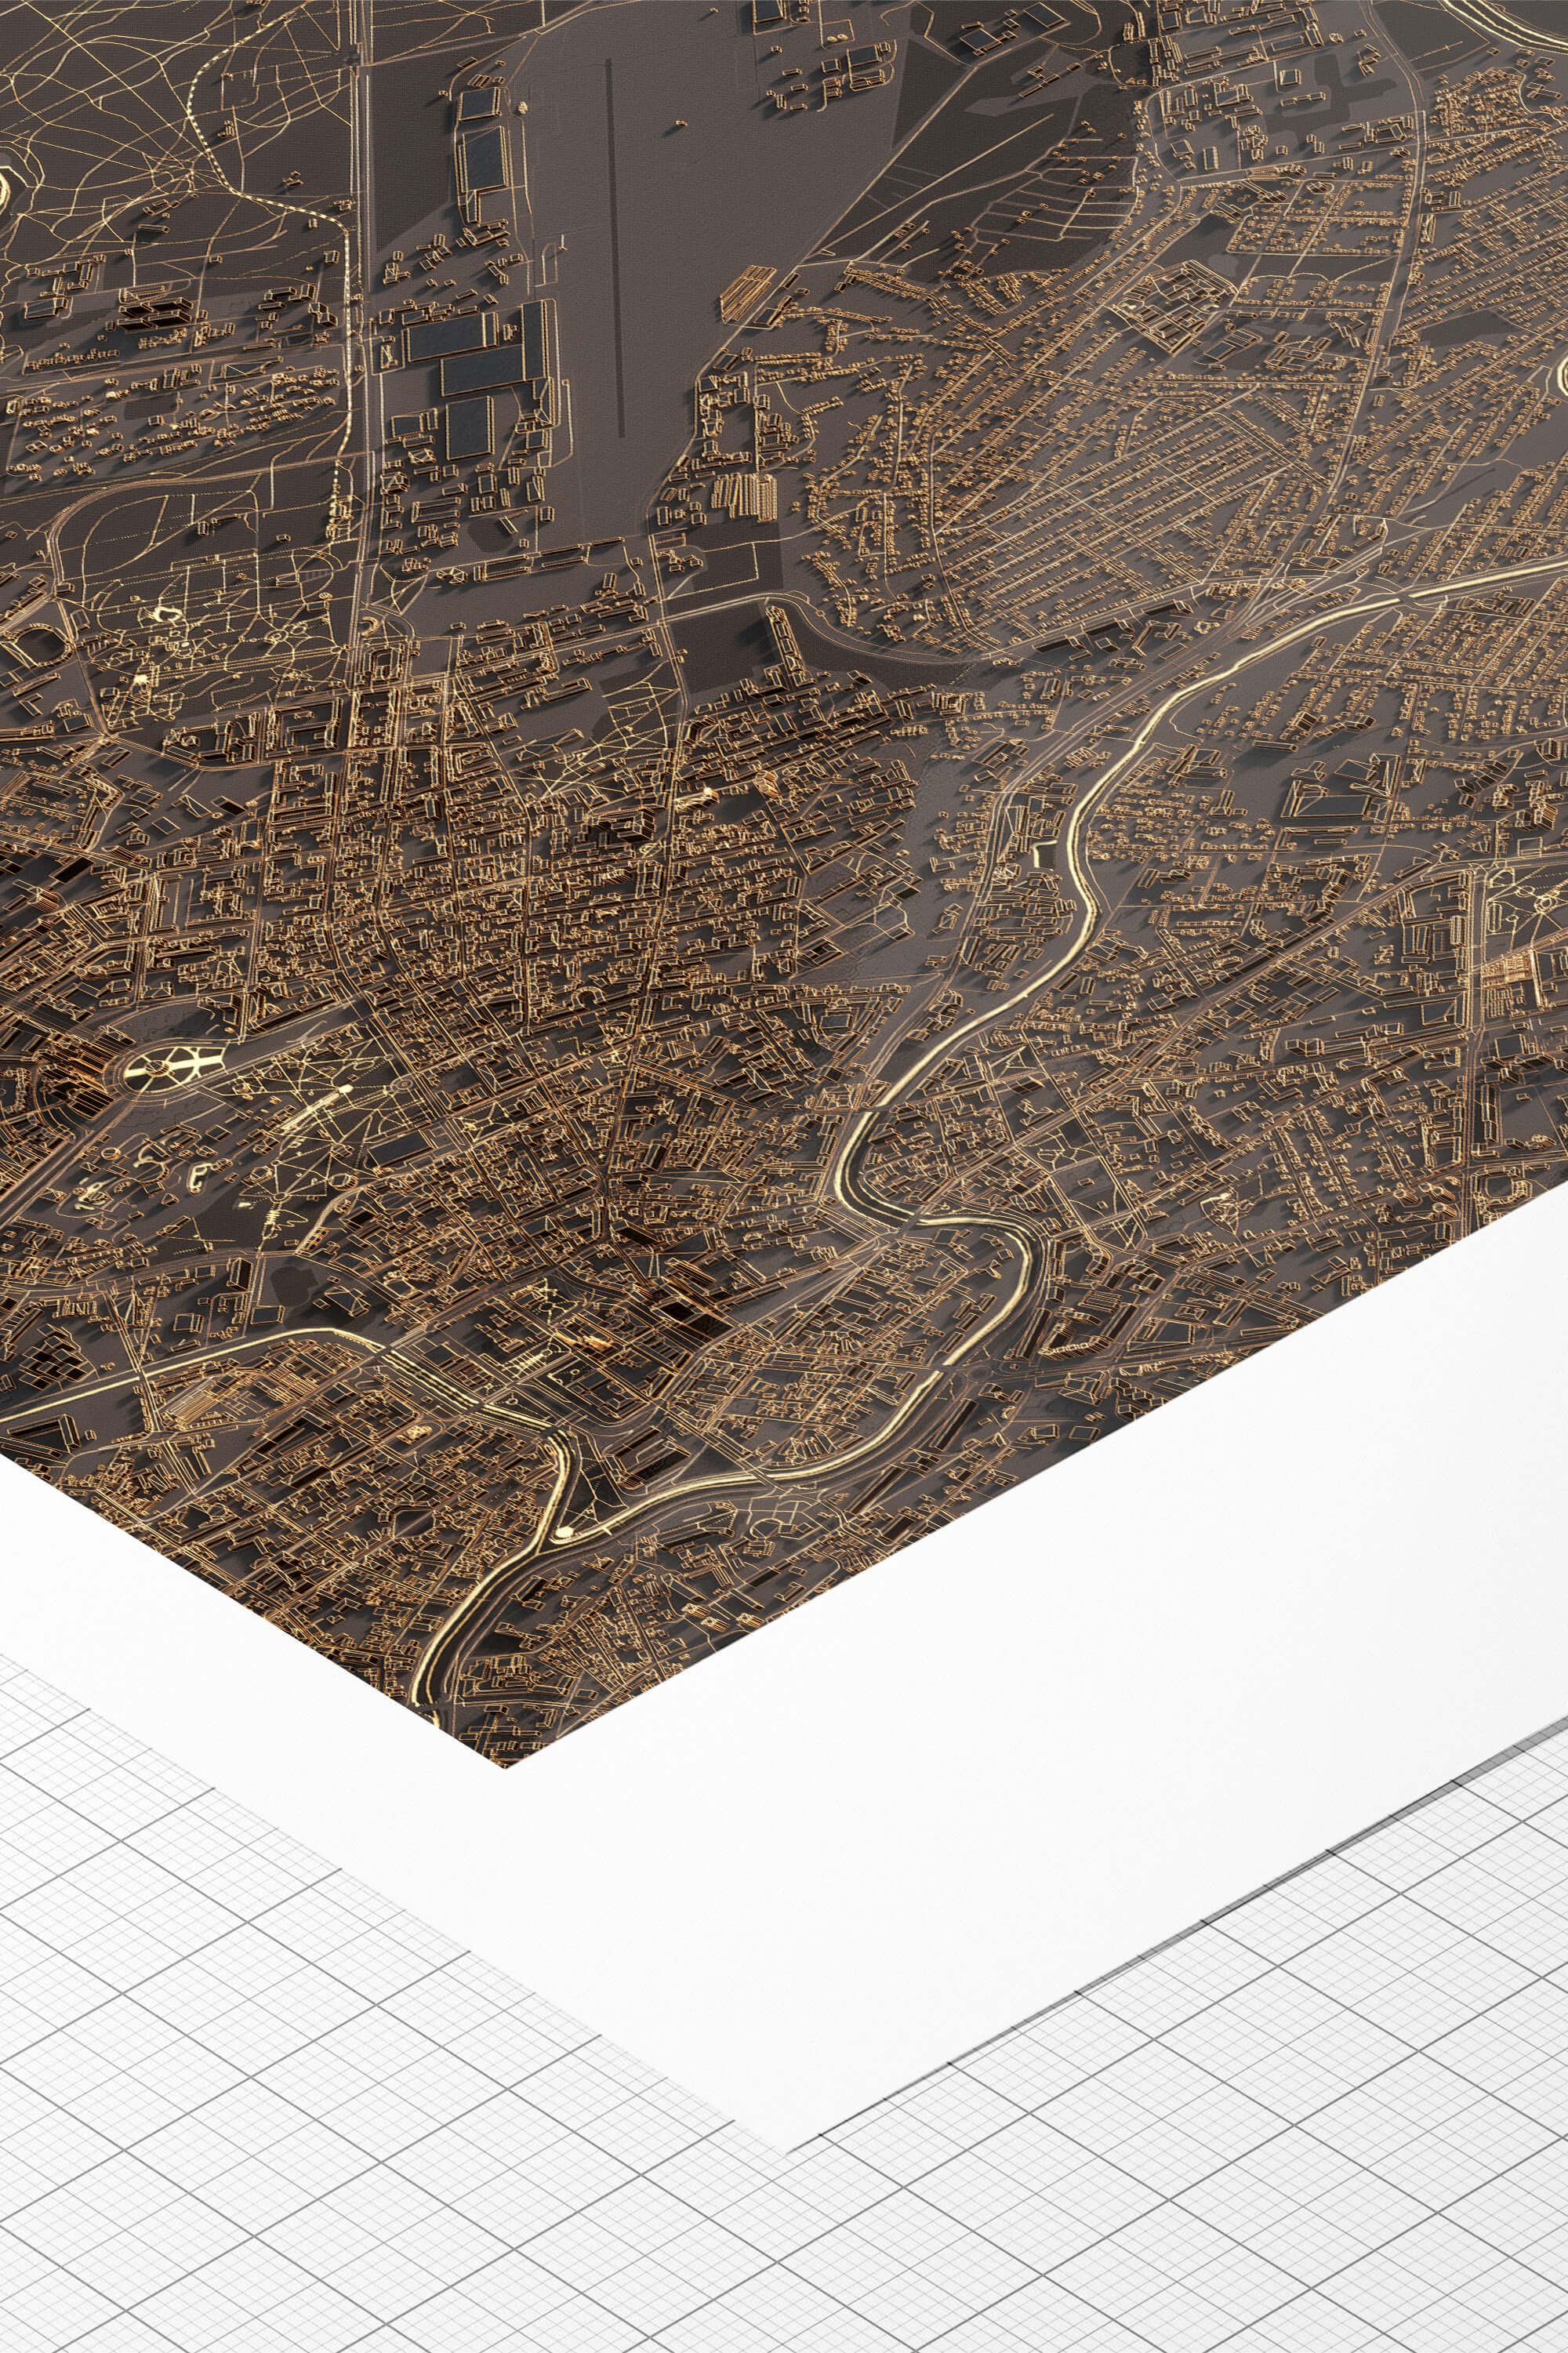 Приклад файного друку на папері hahnemuhle чорної мапи міста